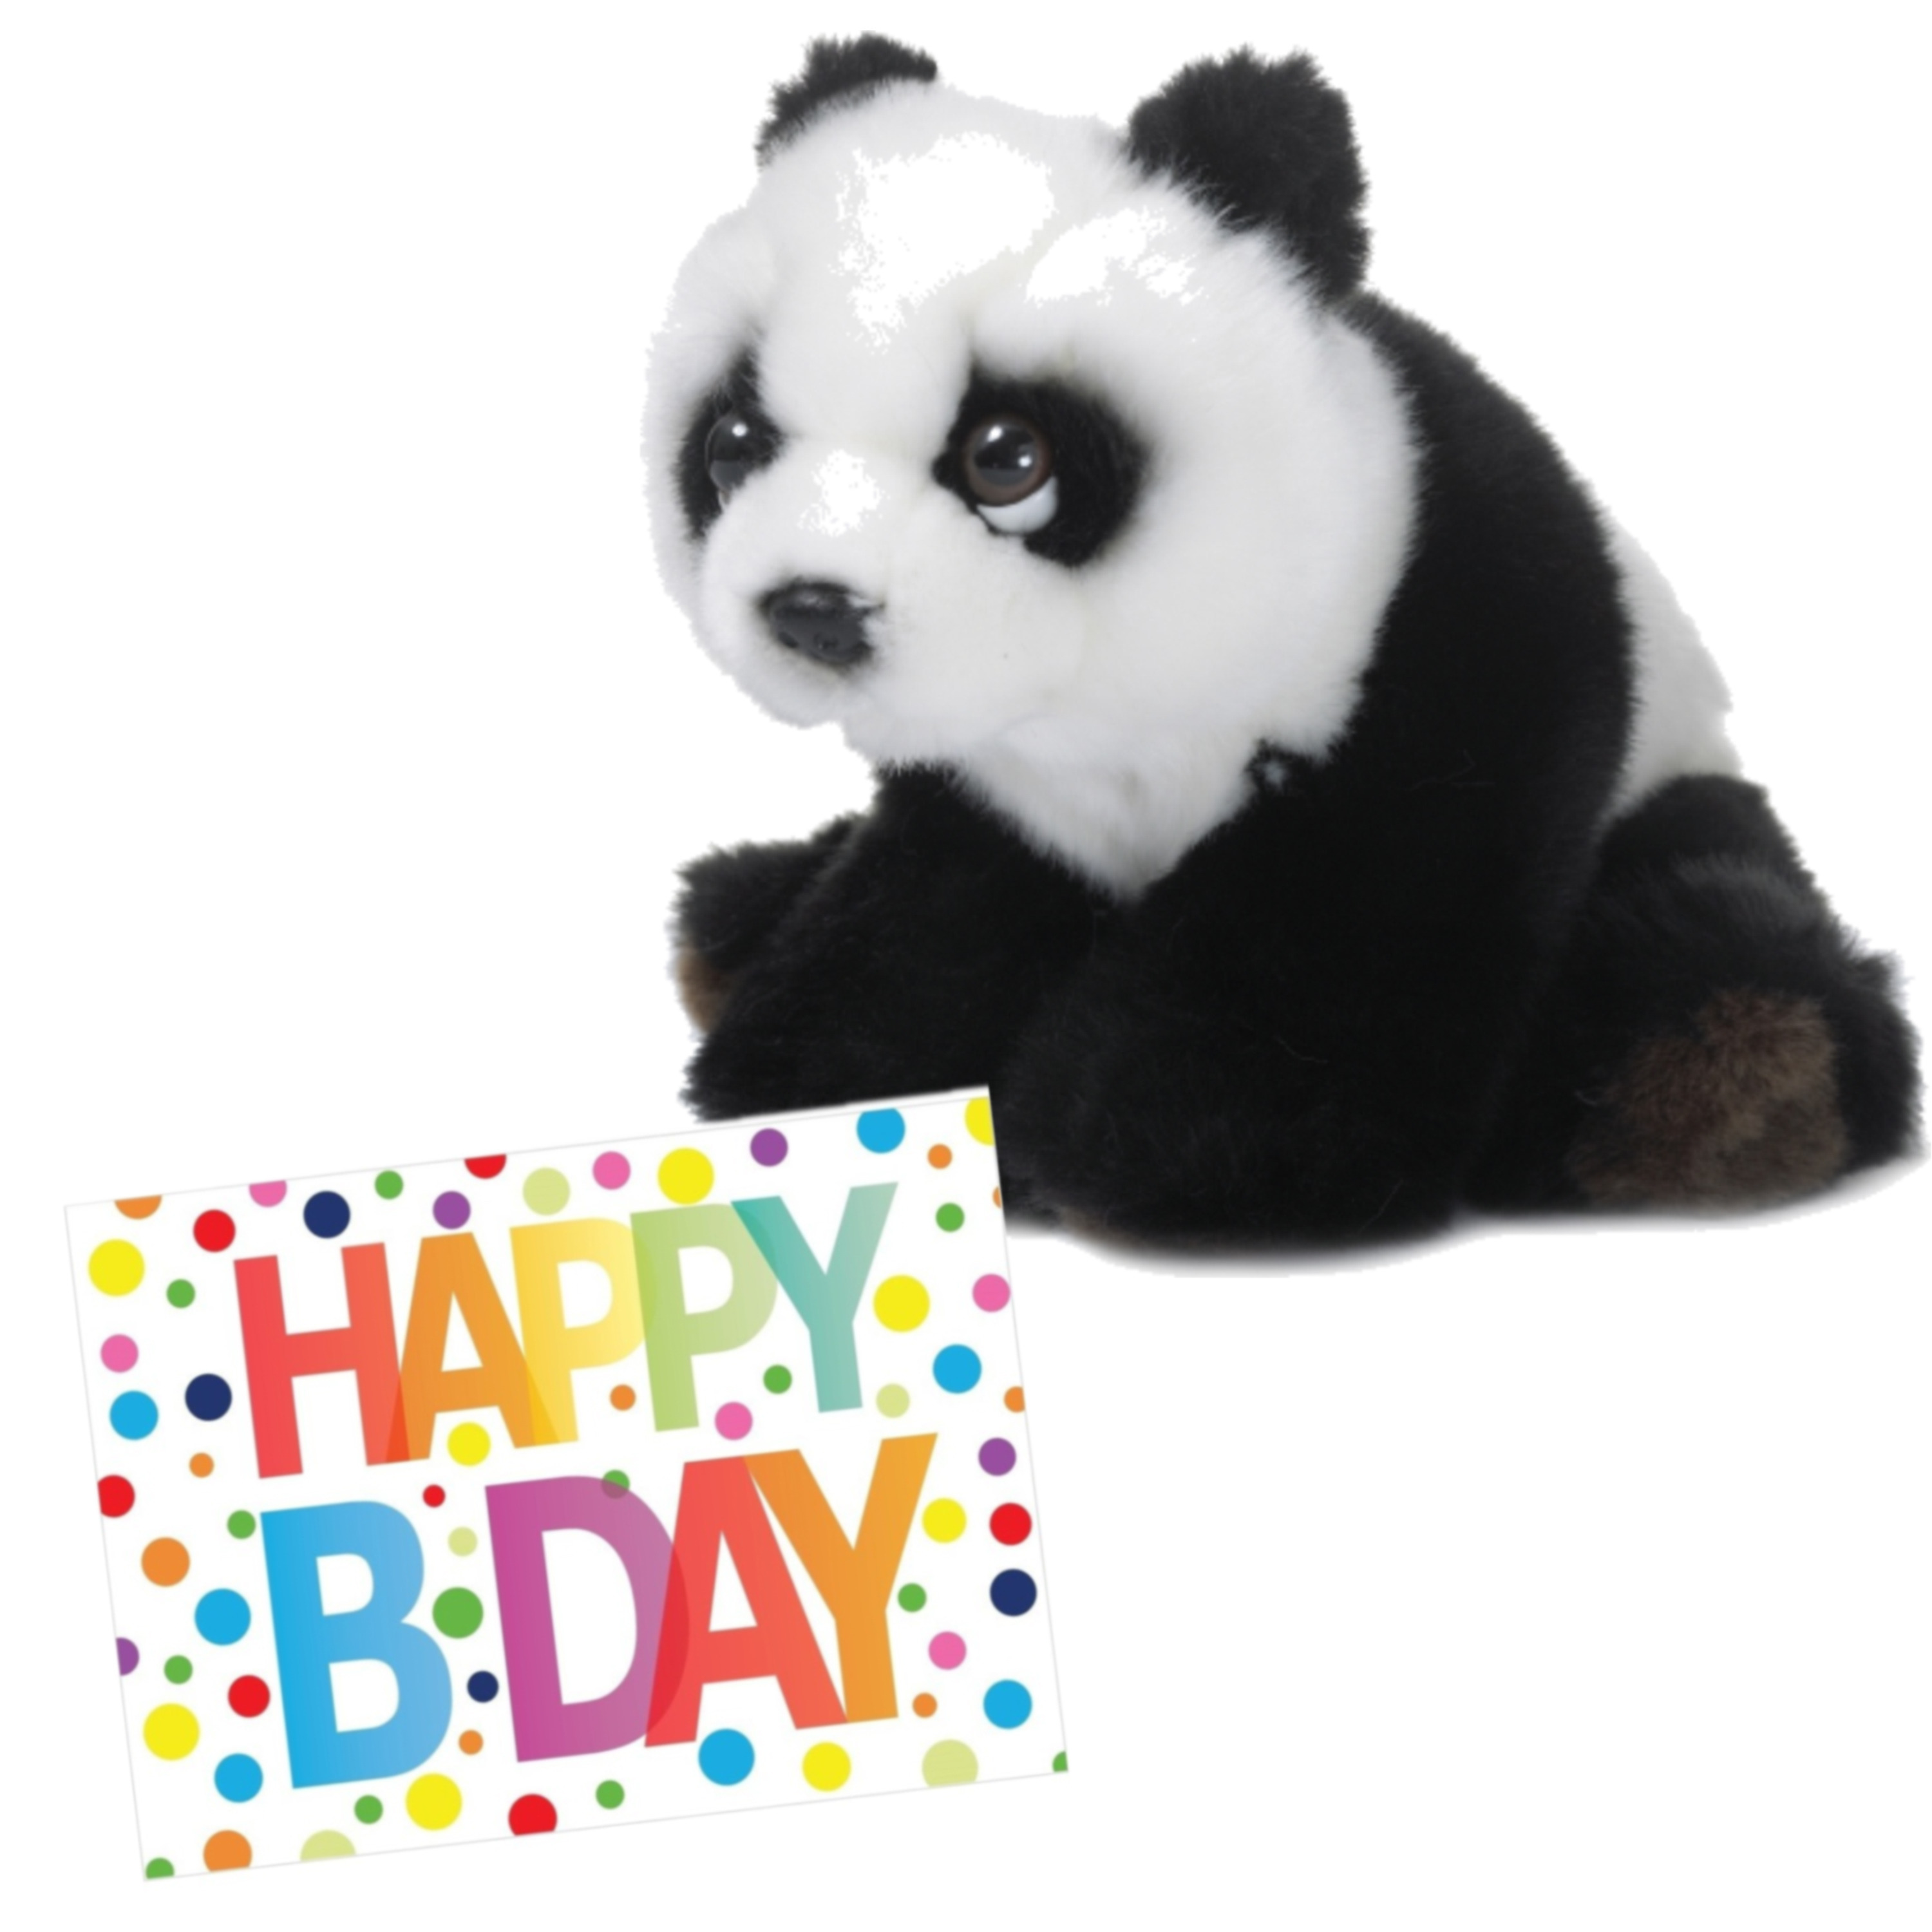 Pluche knuffel panda beer 15 cm met A5-size Happy Birthday wenskaart -